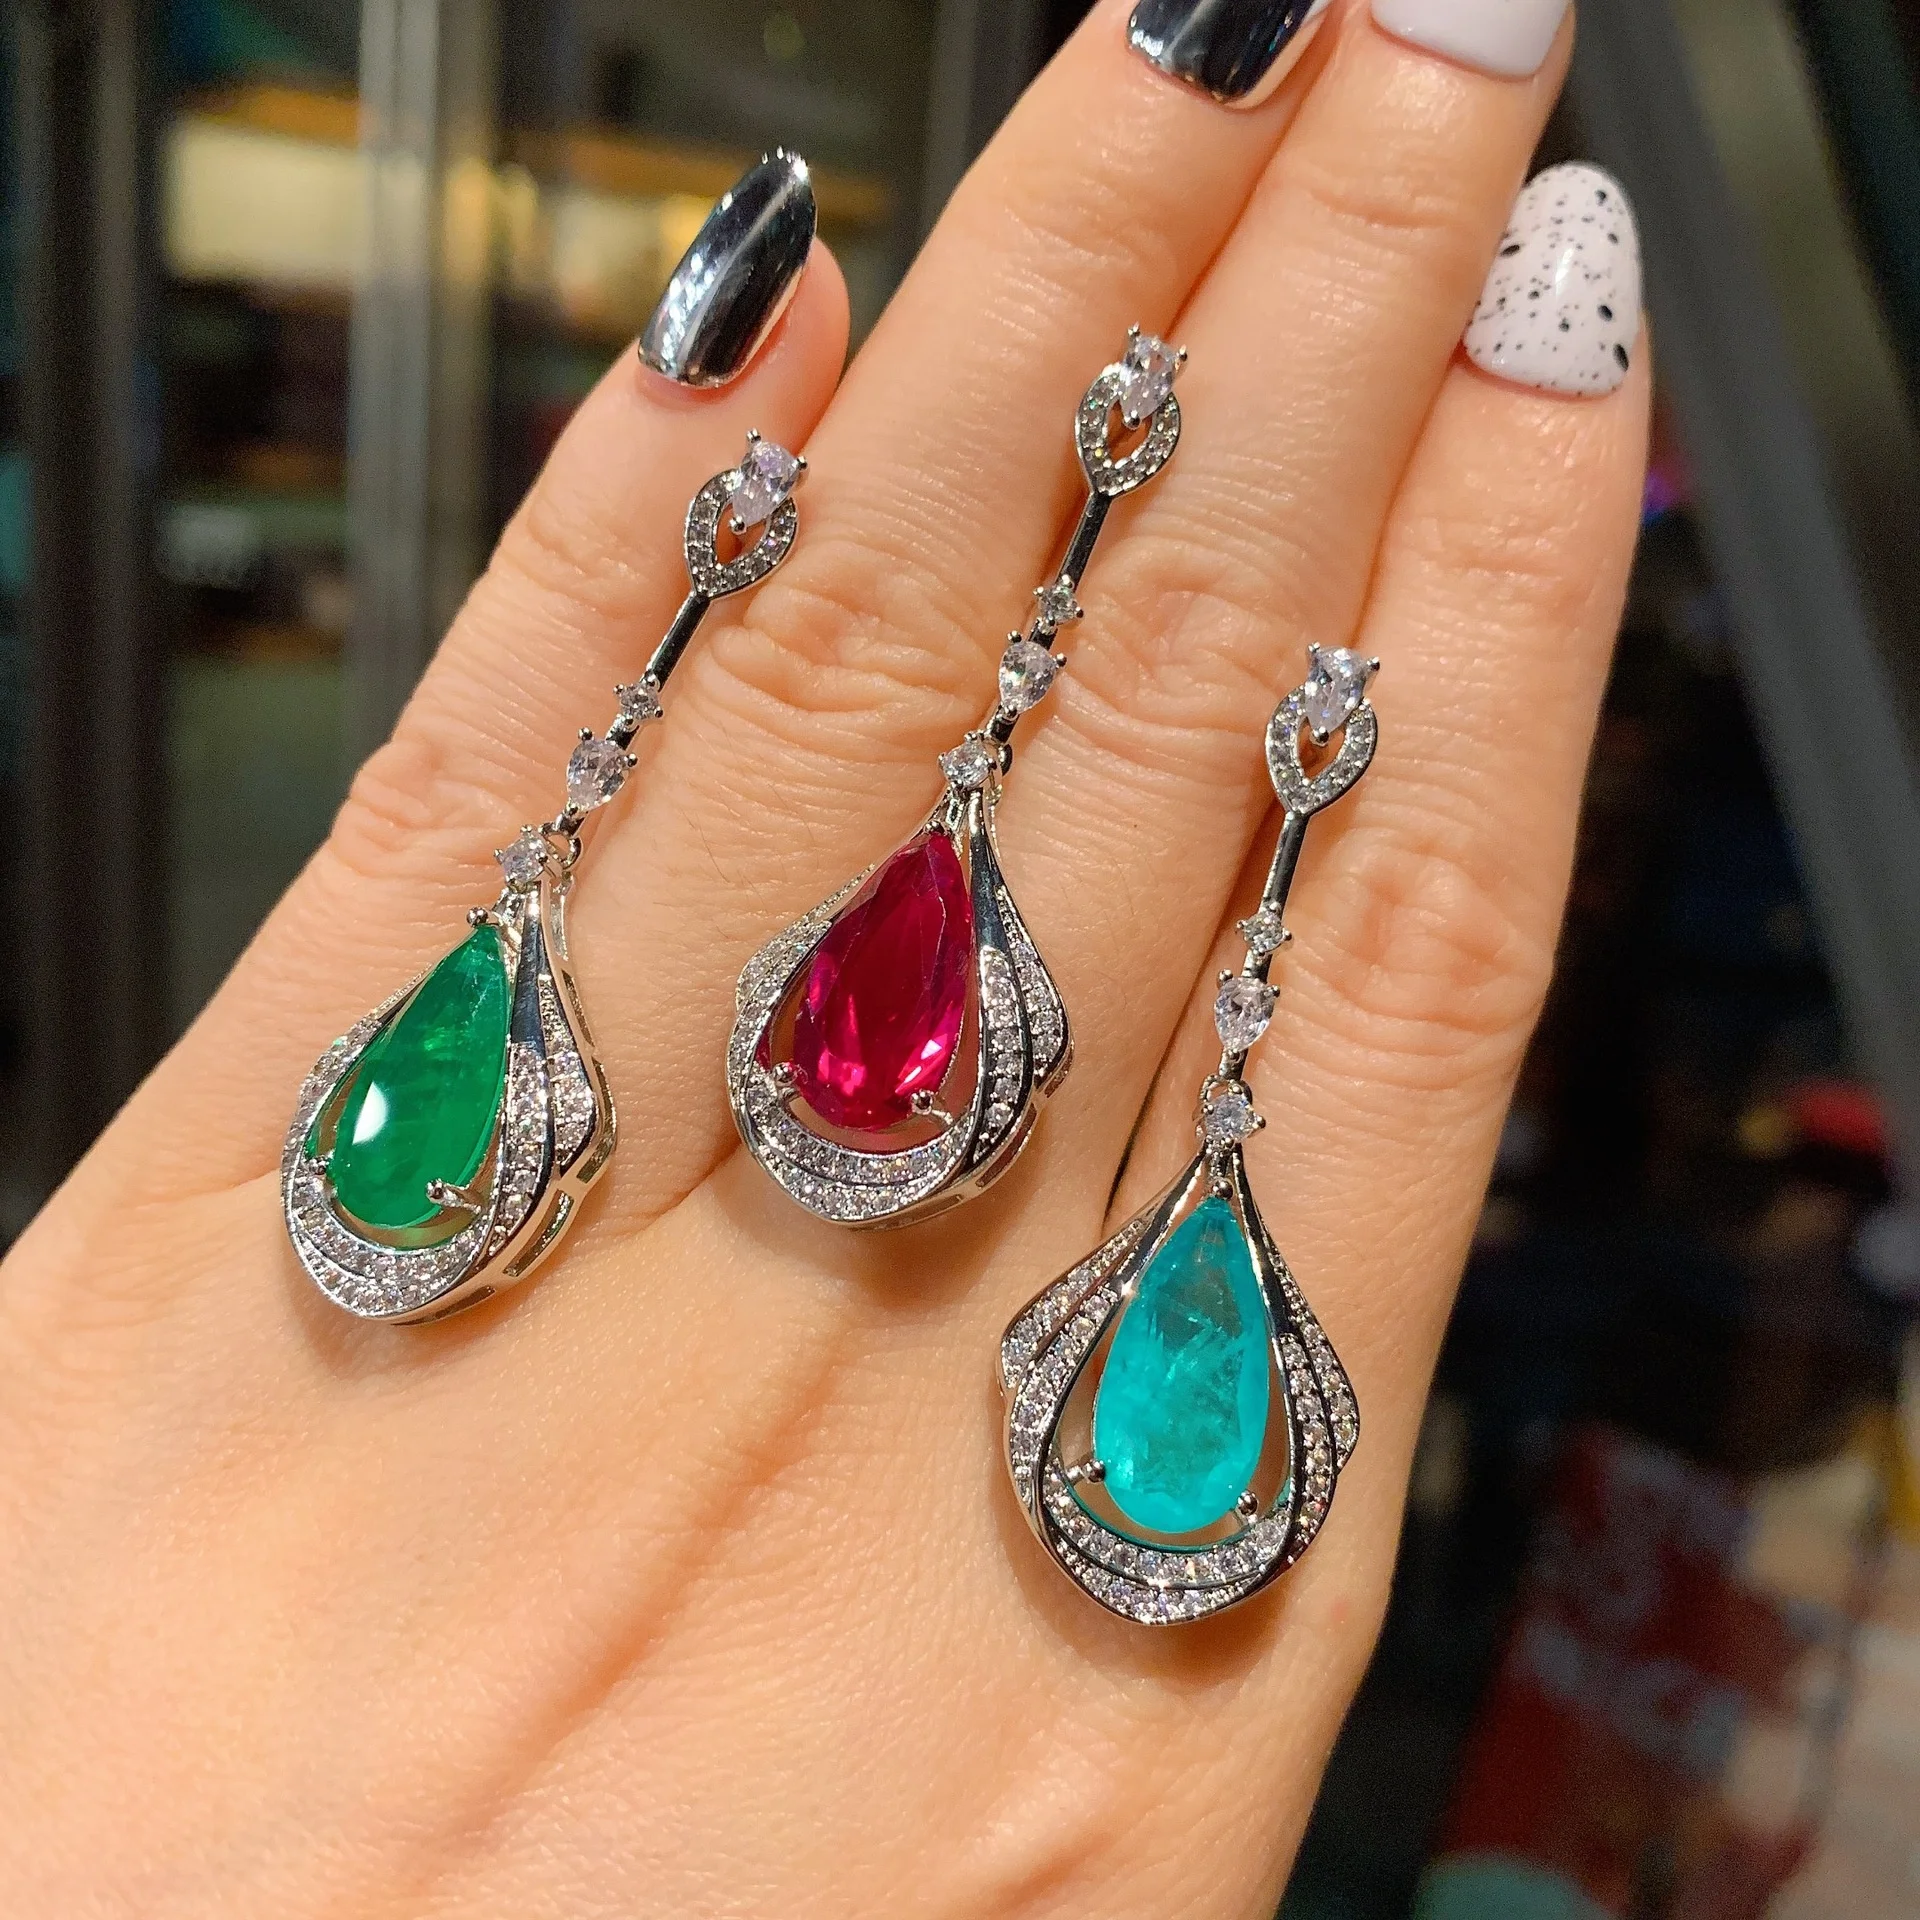 

Luxury Elegant Vintage Ruby Created Gemstone Women Drop Dangle Earrings Jewelry Gift, Picture shows